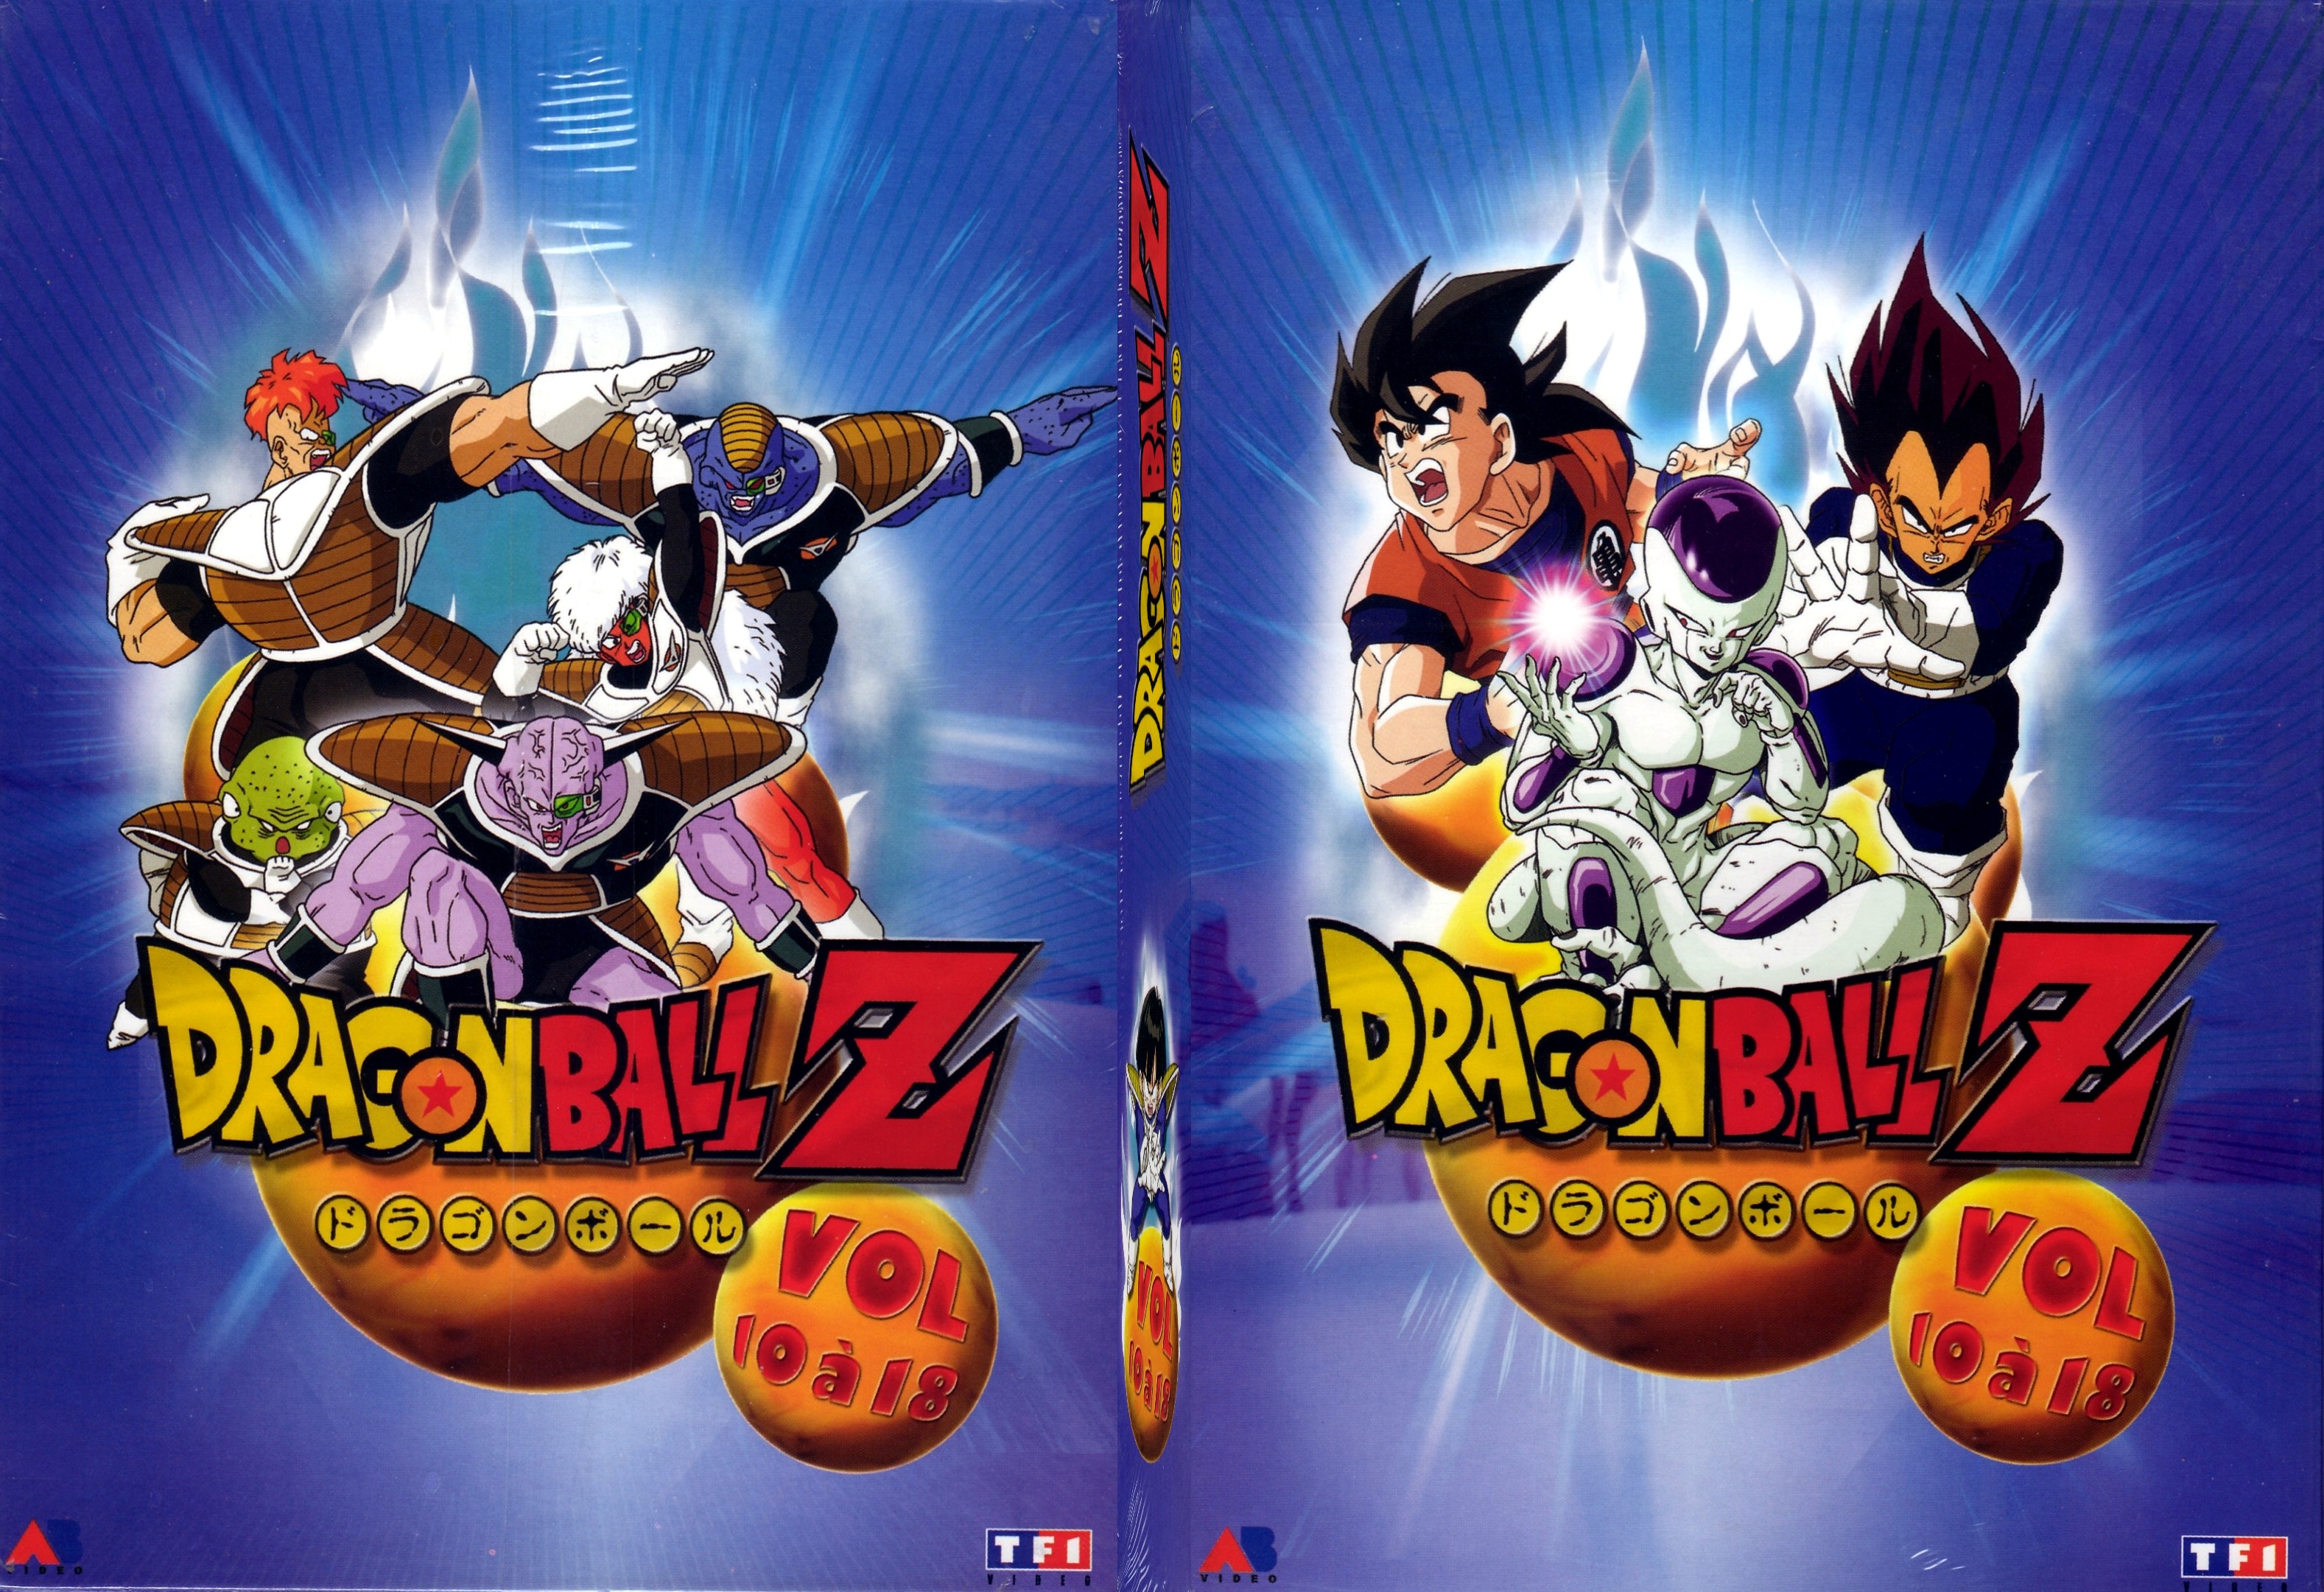 Jaquette DVD Dragon ball Z vol 10  18 - SLIM